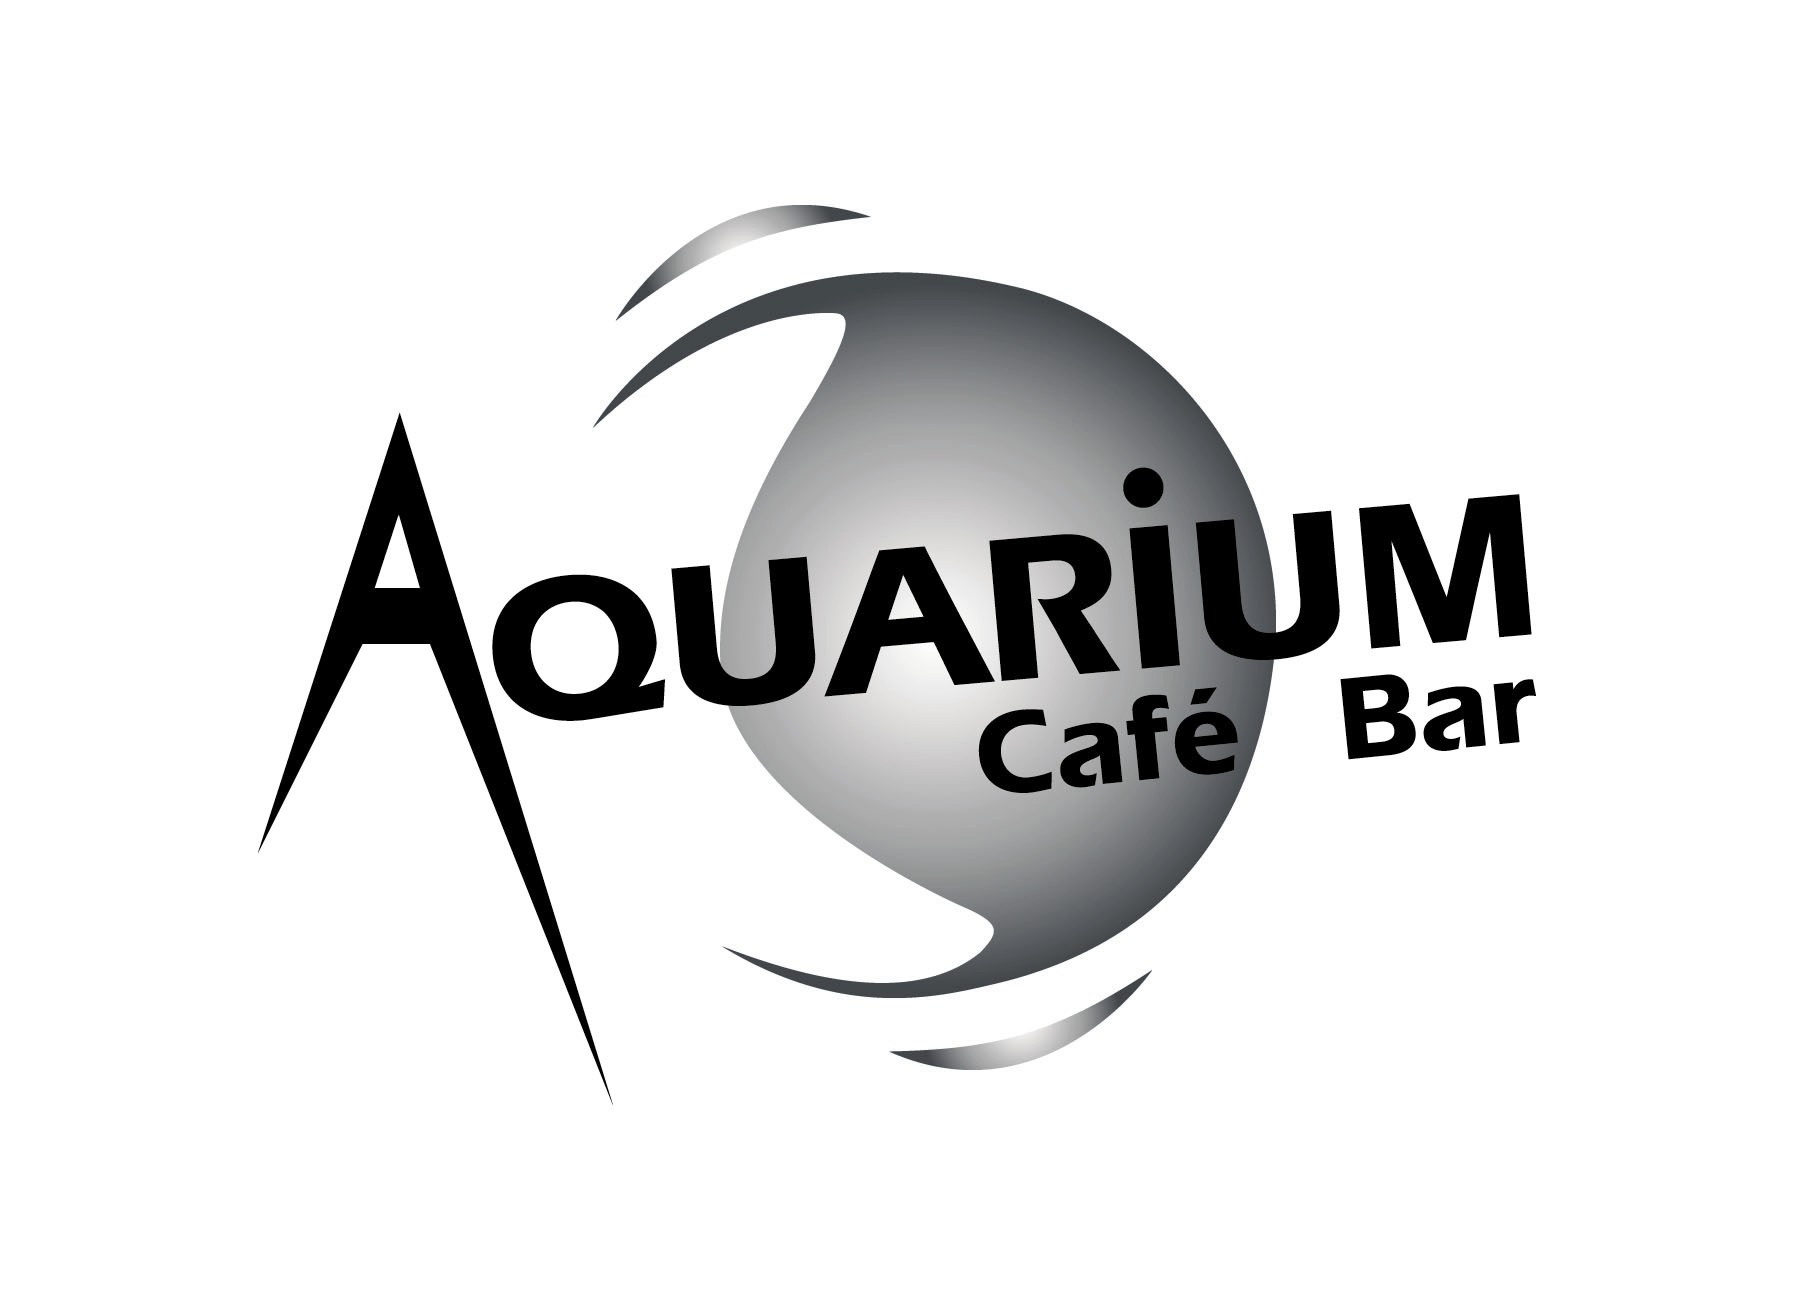 Aquarium Café Bar